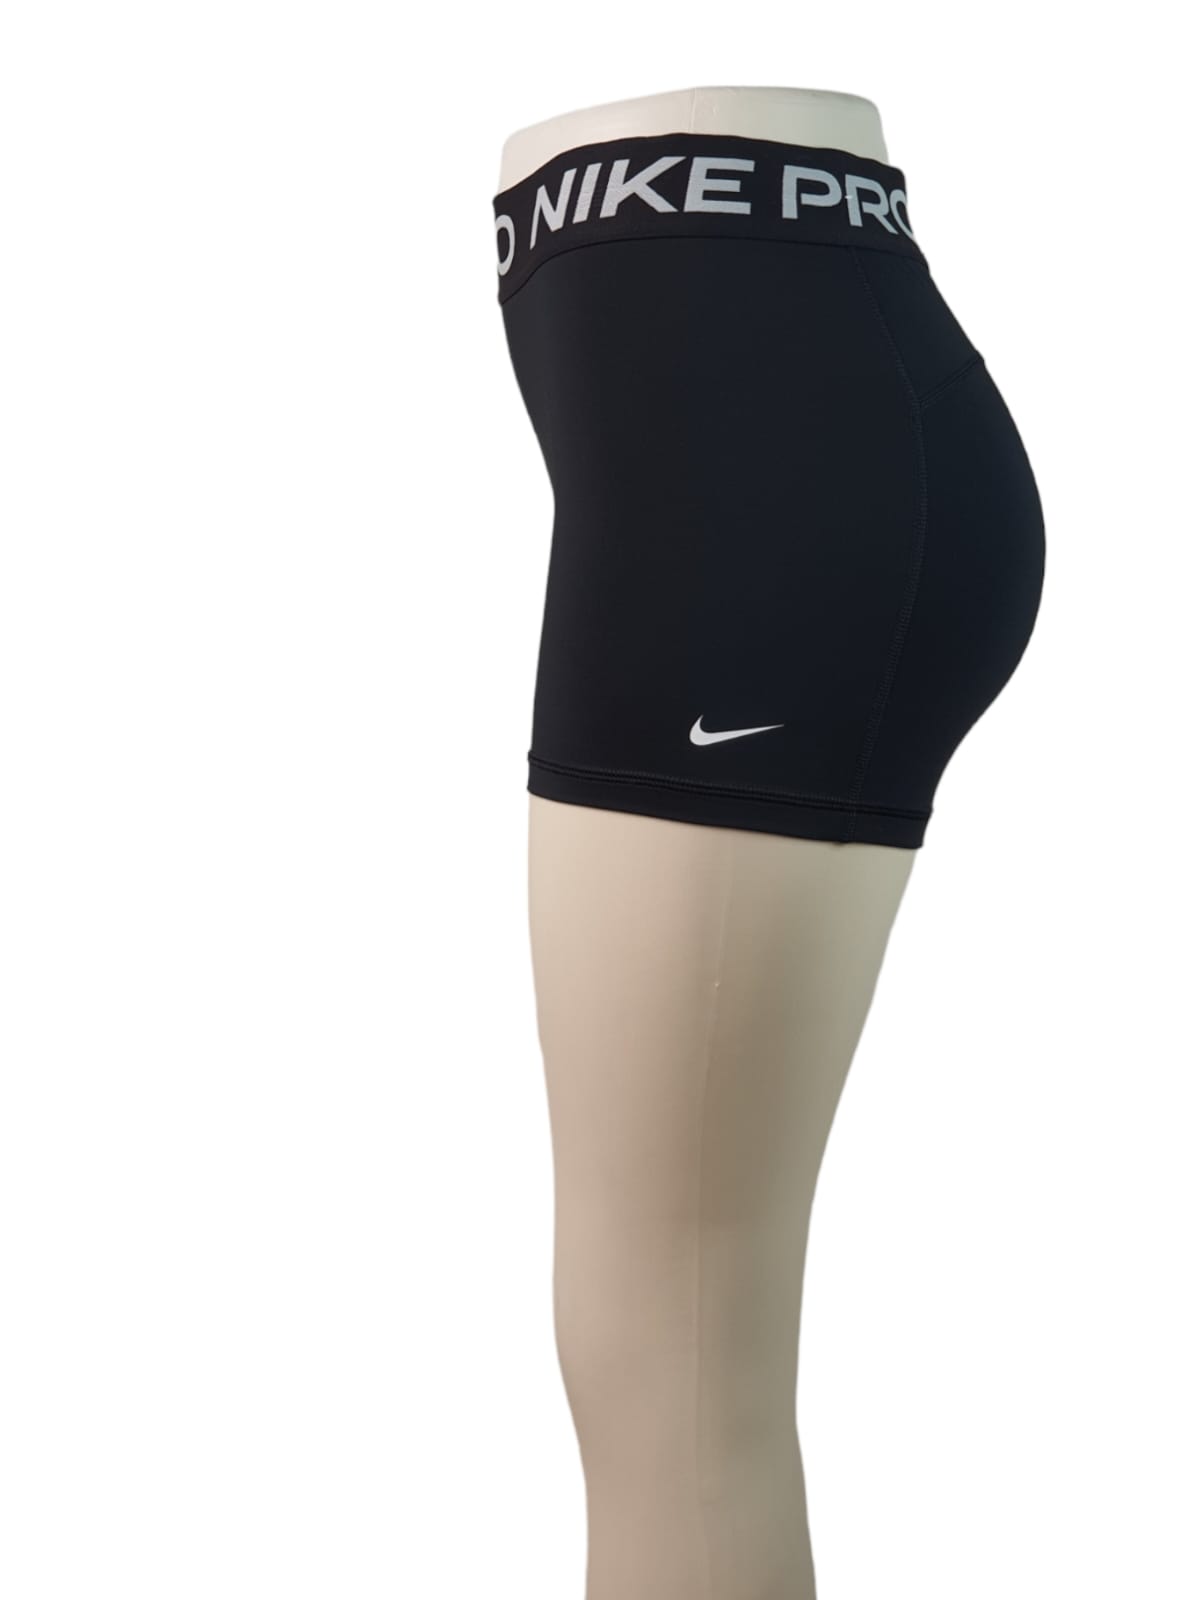 Nike Pro Dri-Fit Cyling Short ( M )